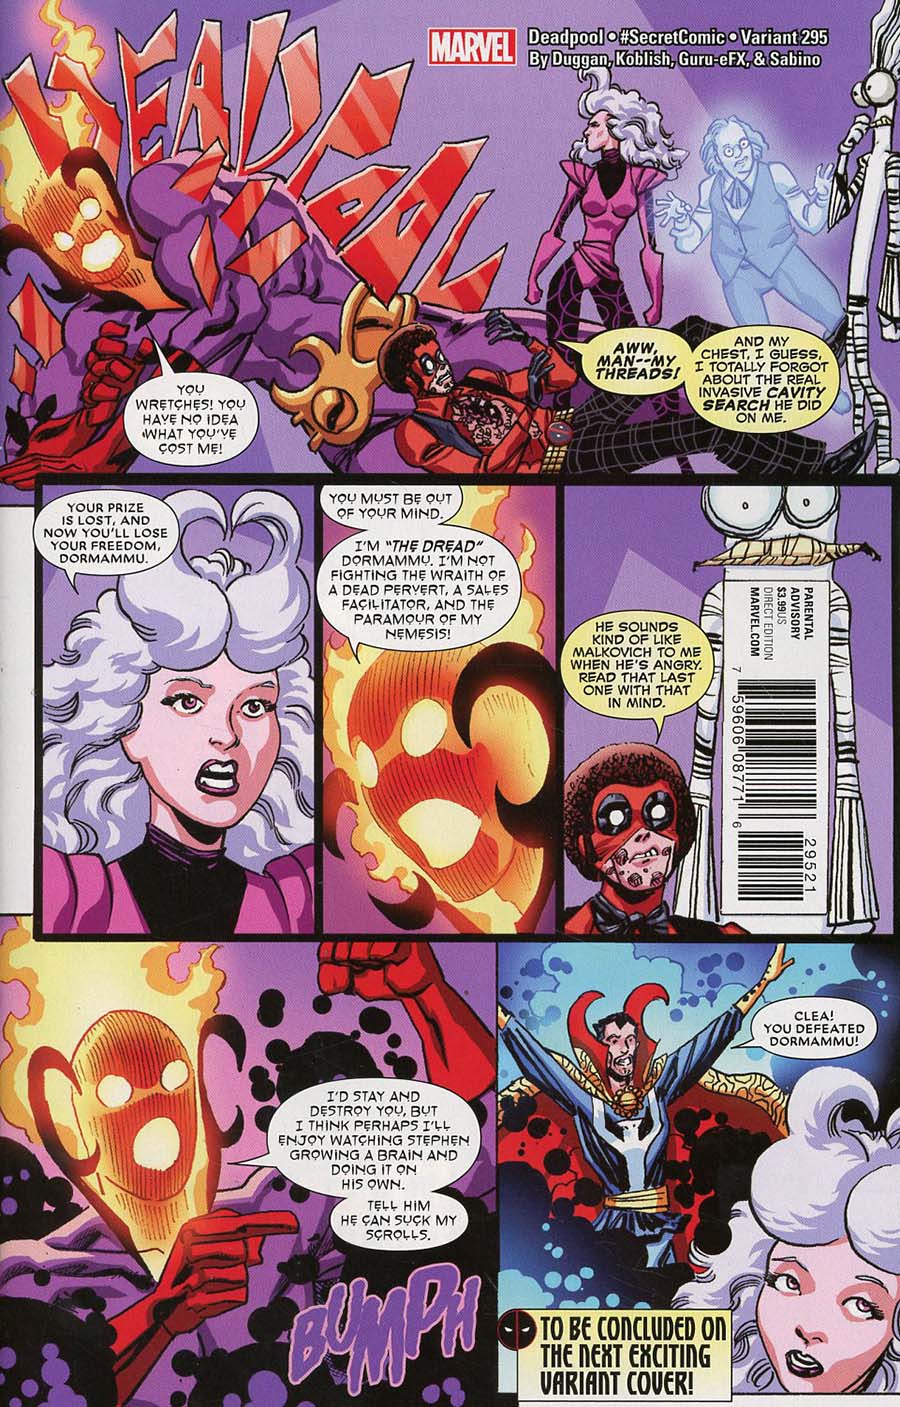 Despicable Deadpool #295 Variant Edition (Koblish) [2018]